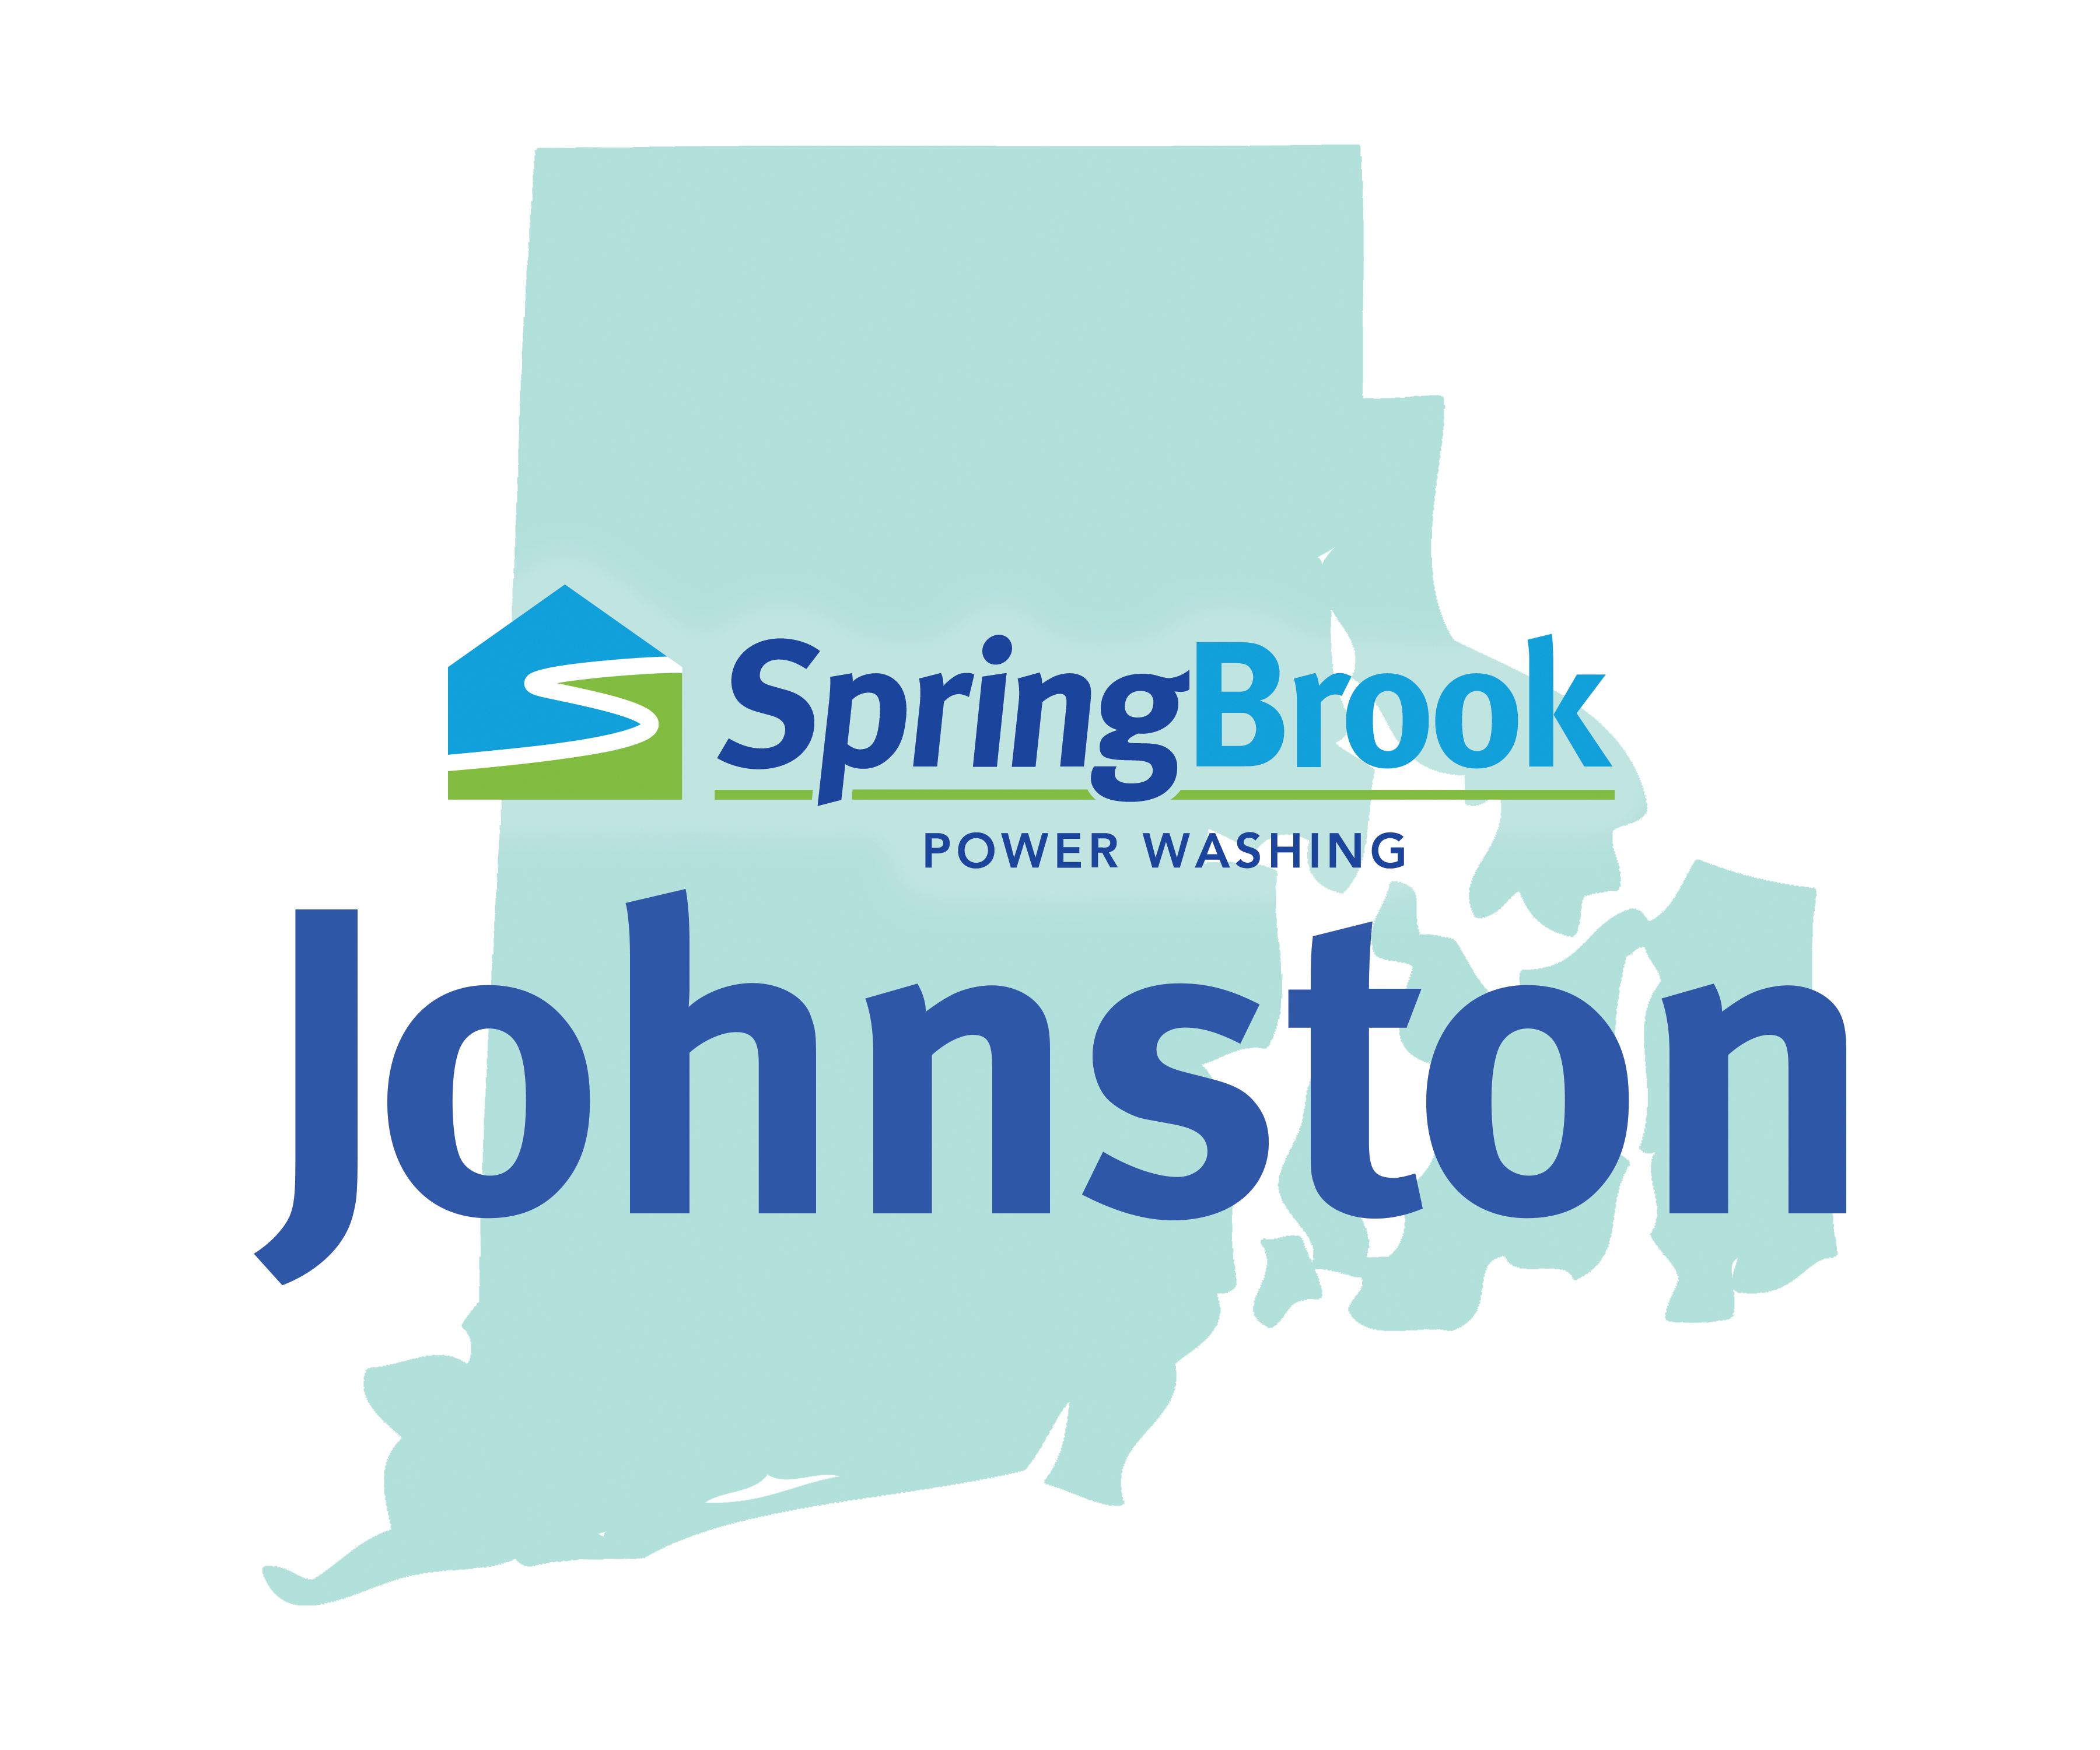 Springbrook Power Washing Johnston Rhode Island